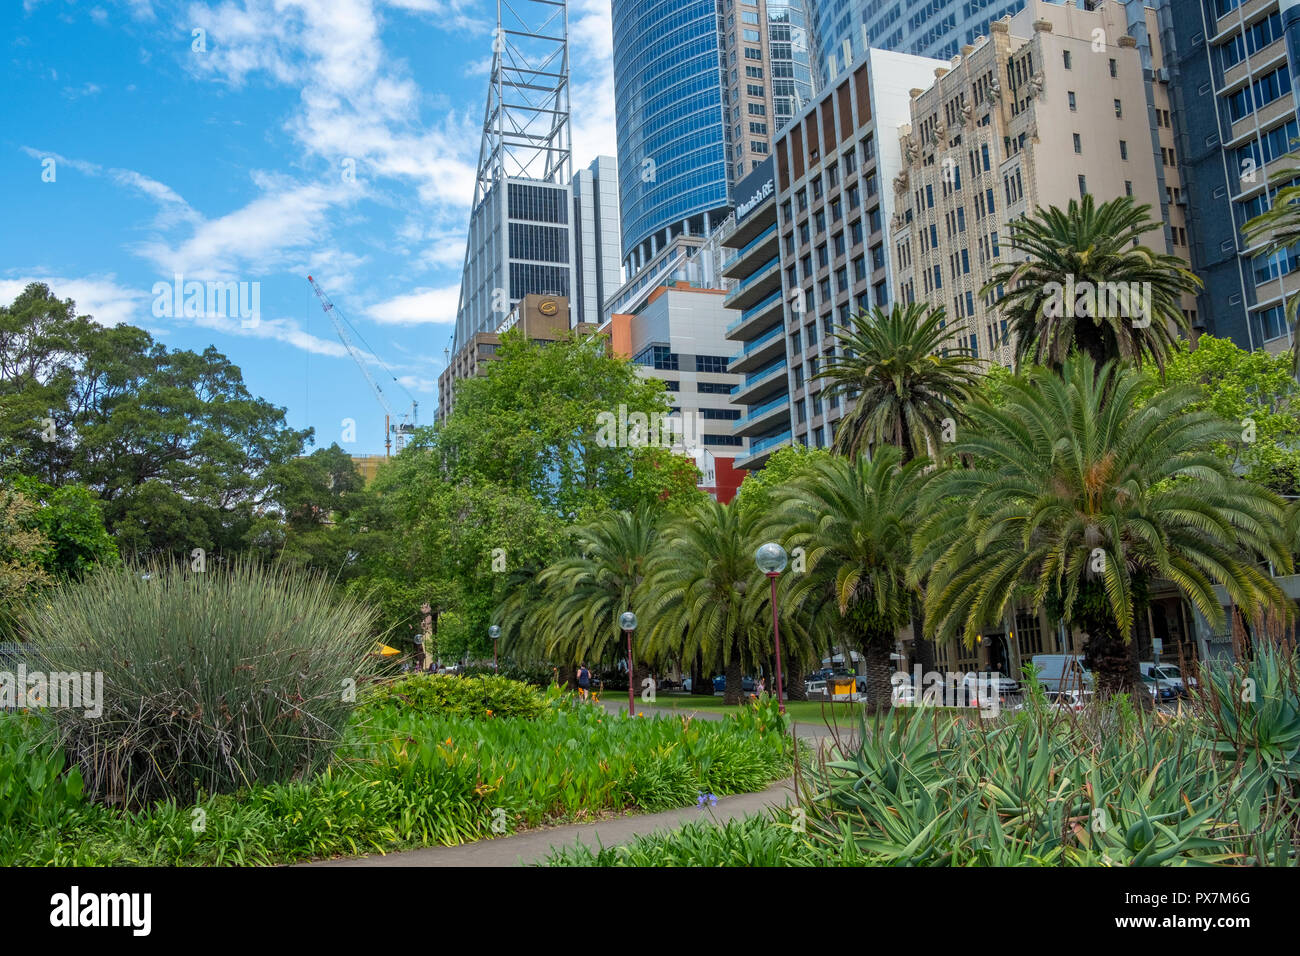 Le palme del giardino botanico reale e grattacieli in Macquarie Street, Sydney, Australia Foto Stock